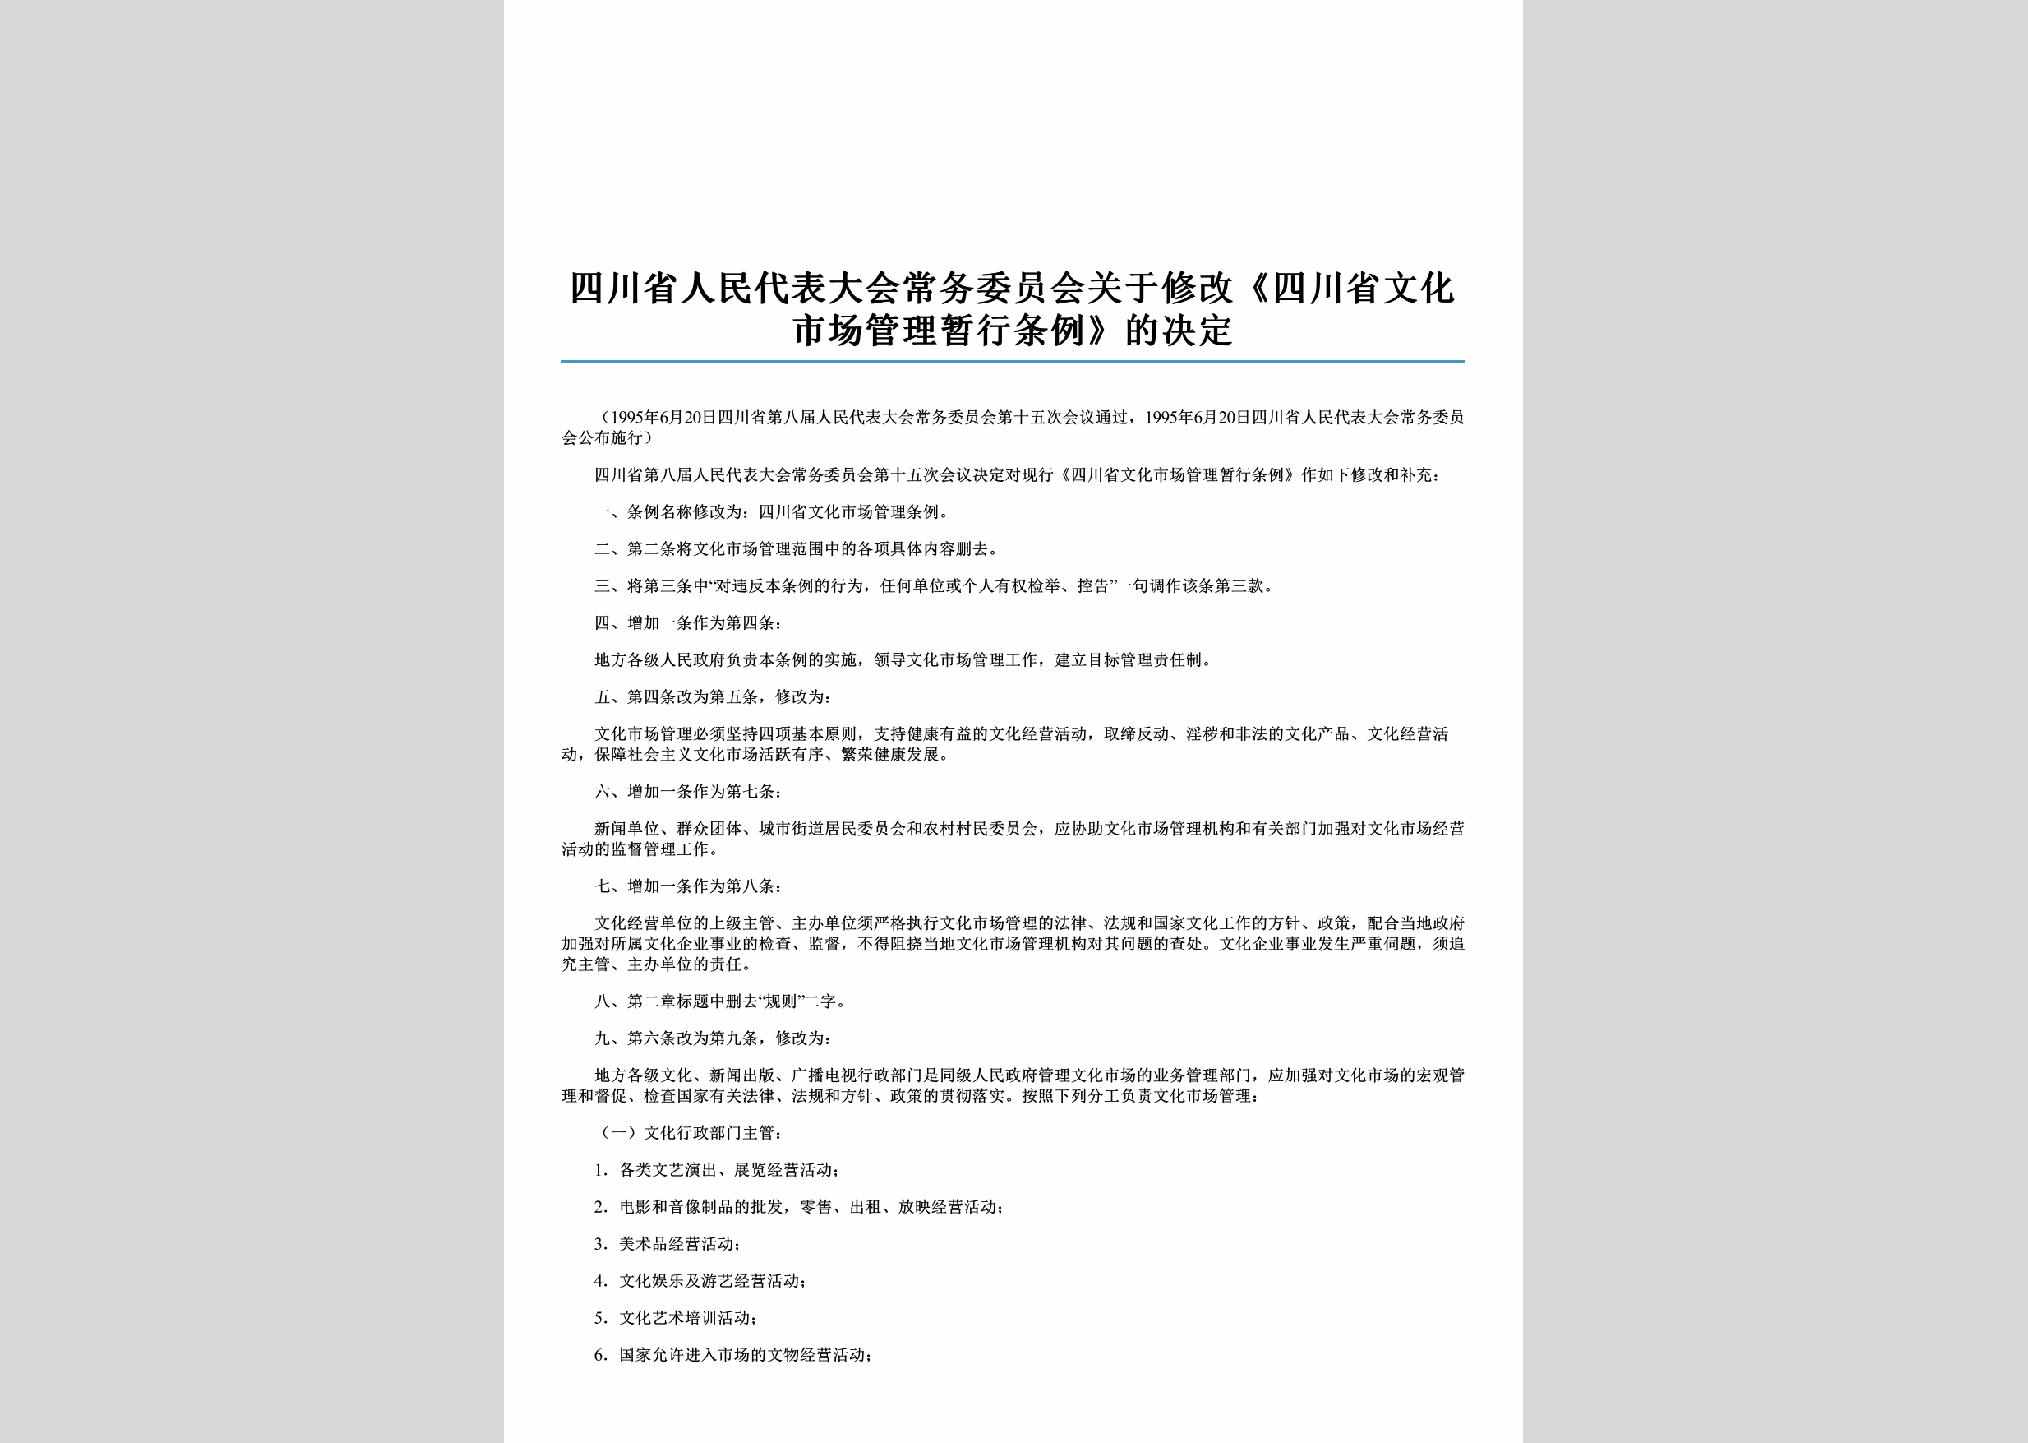 SC-XGSCGLJD-2006：关于修改《四川省文化市场管理暂行条例》的决定